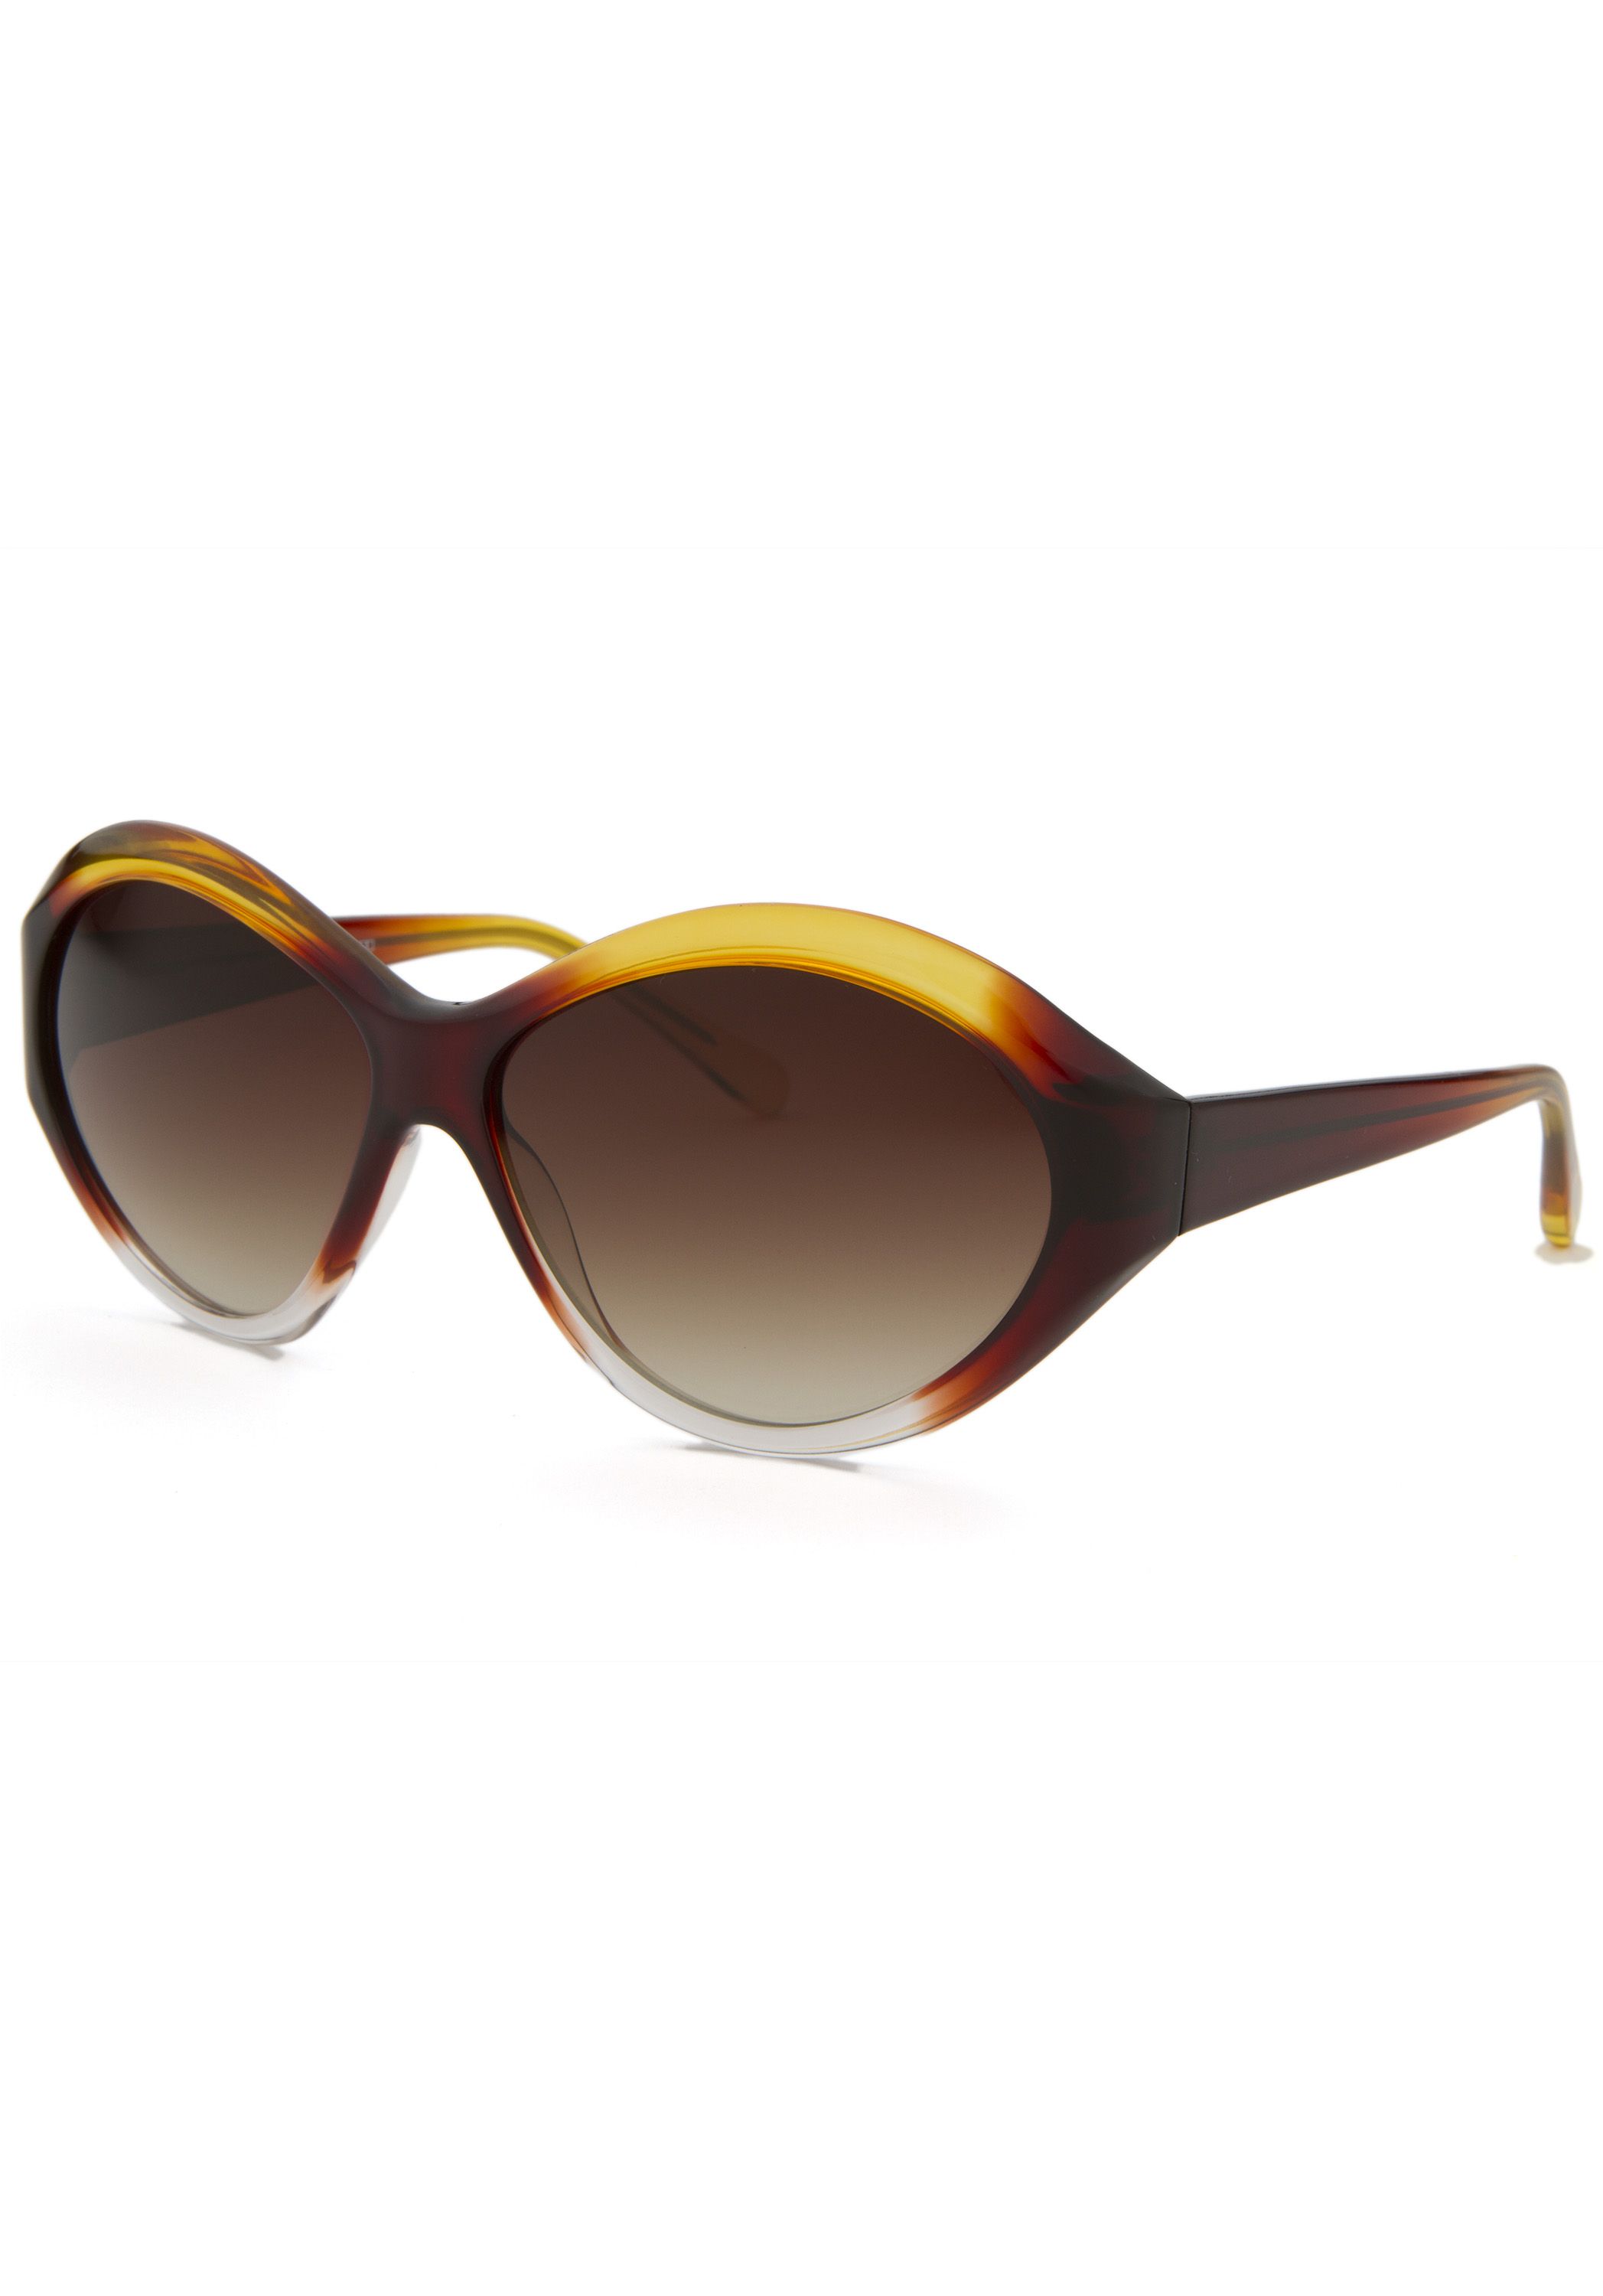 Women's Casella Fashion Brown and Yellow Sunglasses | Kmart